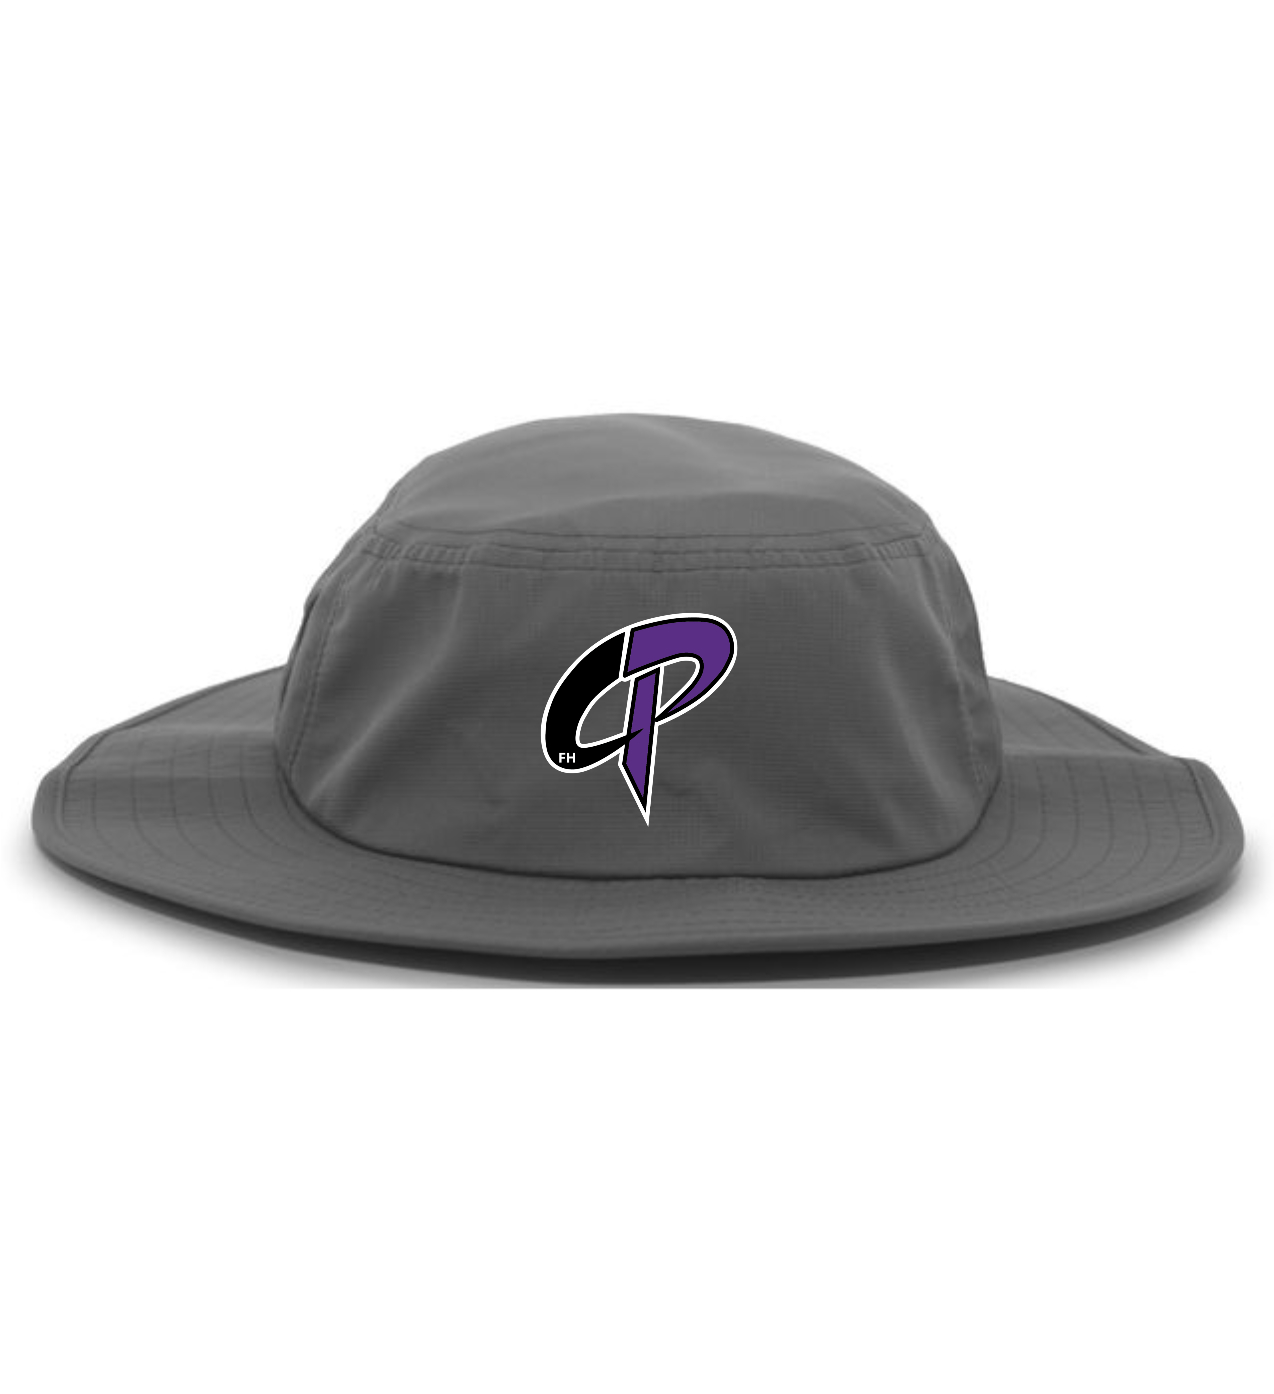 CPFH Pacific Headwear Boonie Hat